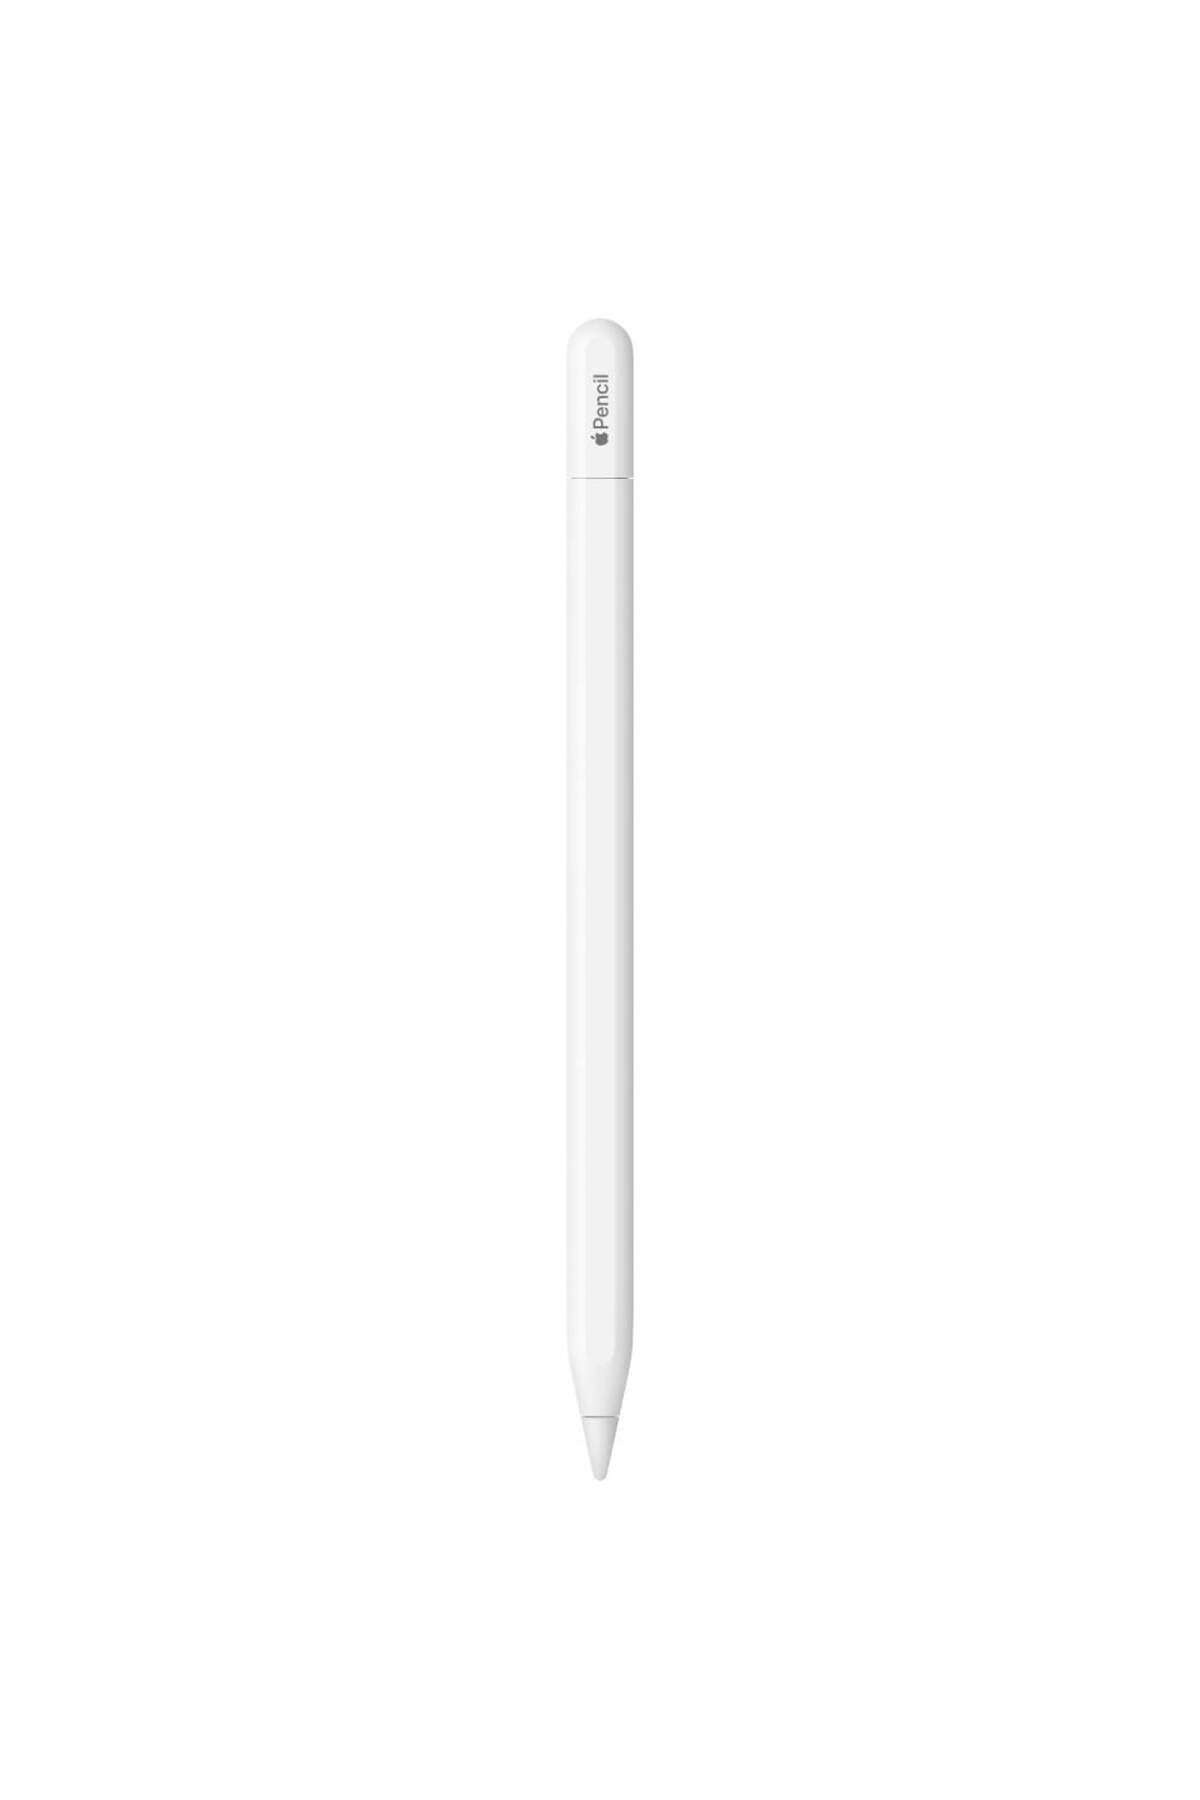 Apple Pencil - Kalem (USB-C) Ipad kalemi